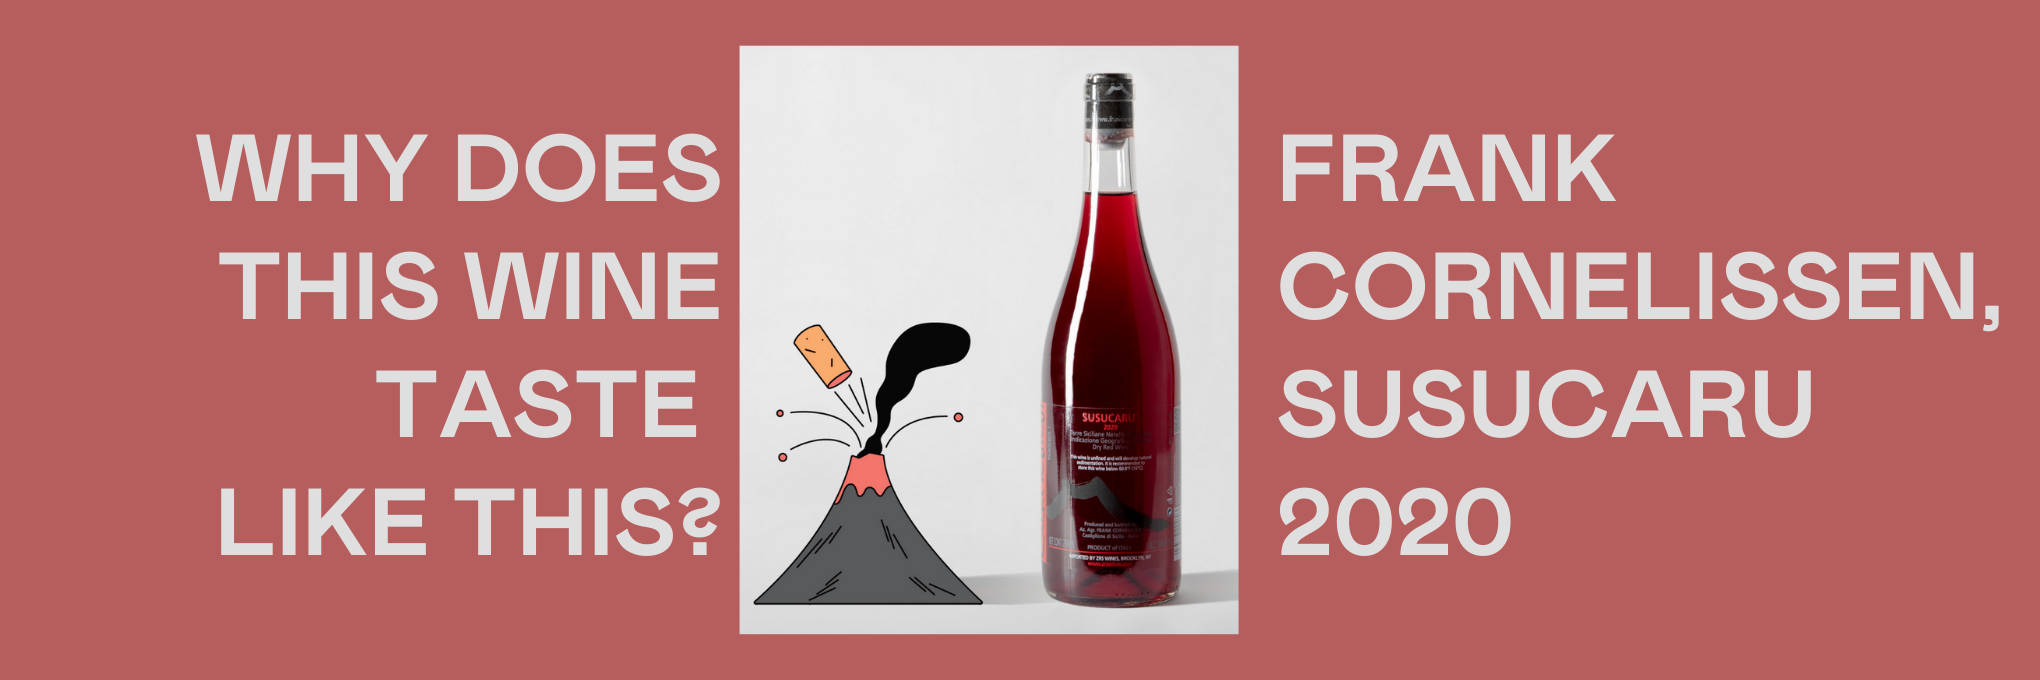 Frank Cornelissen, Susucaru: Why Does This Wine Taste Like This?